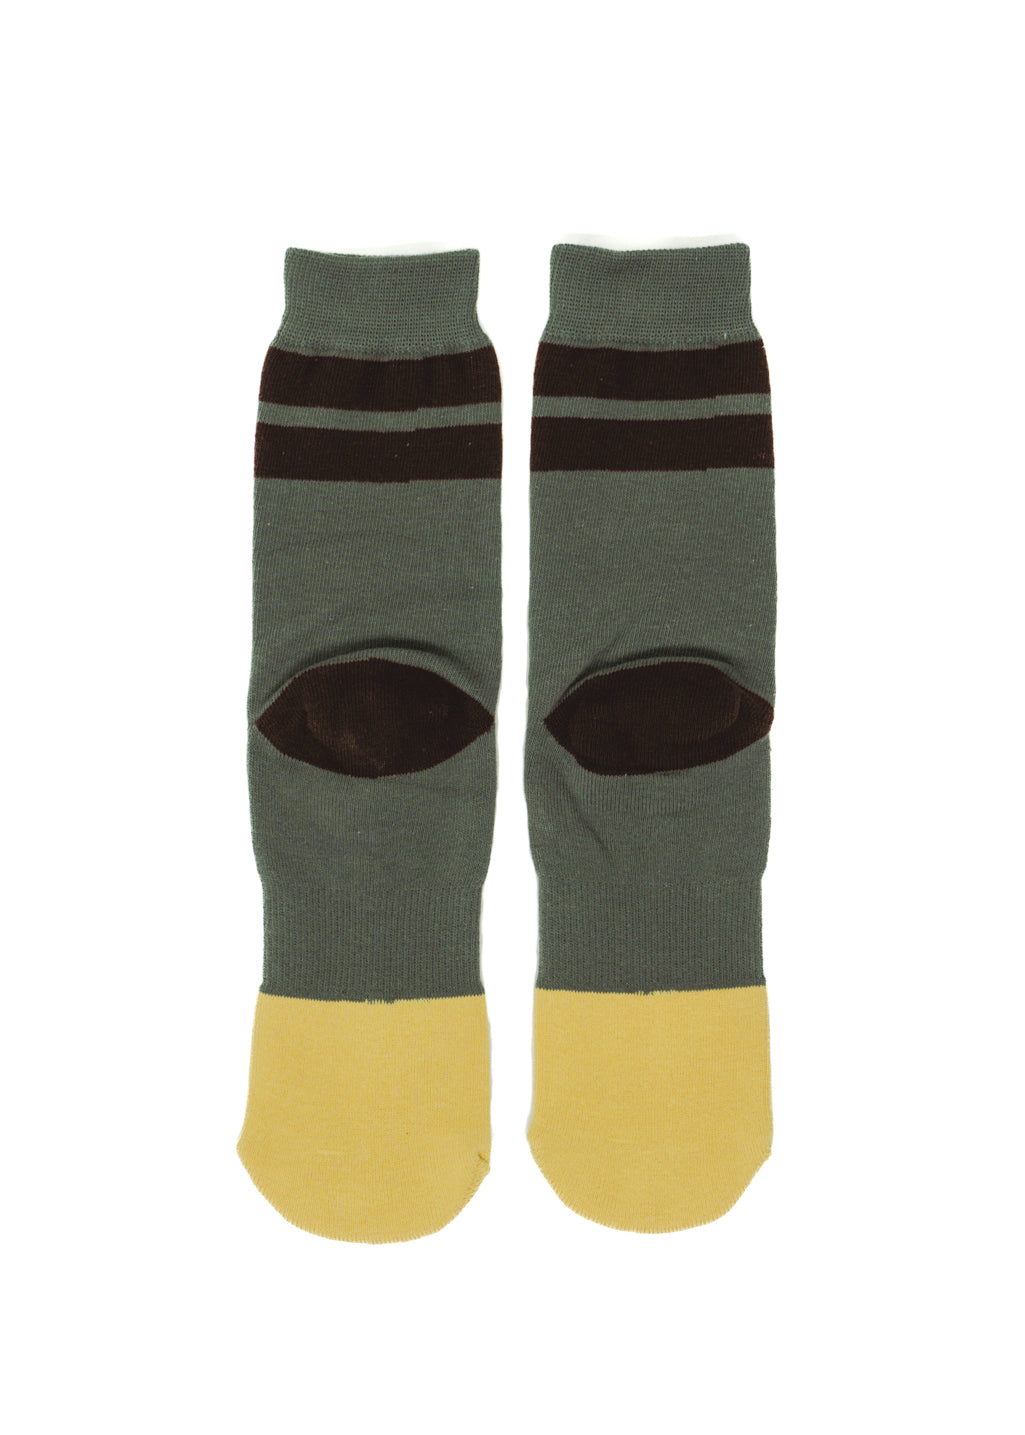 Crest Socks | Provincial Tones - Hardpressed Print Studio Inc.